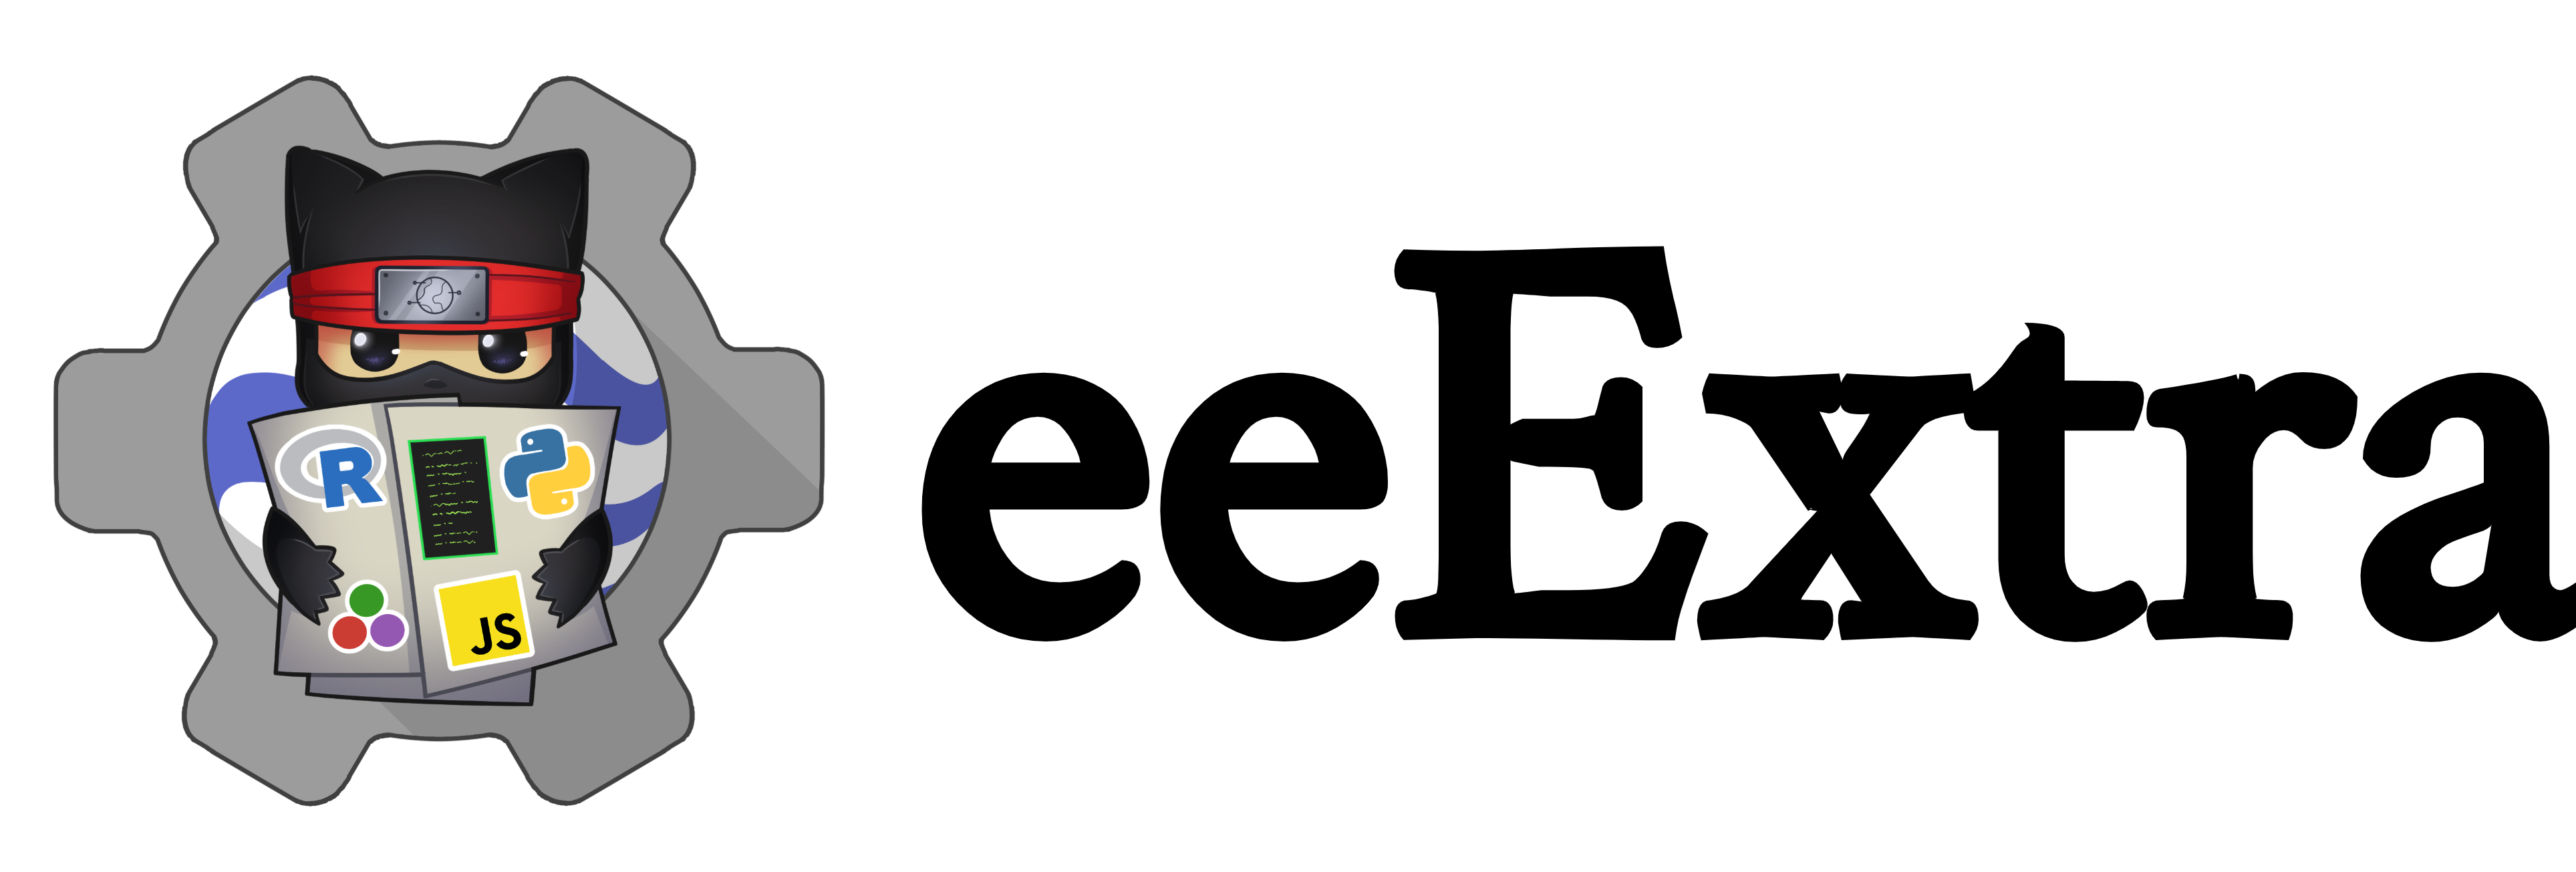 ee_extra